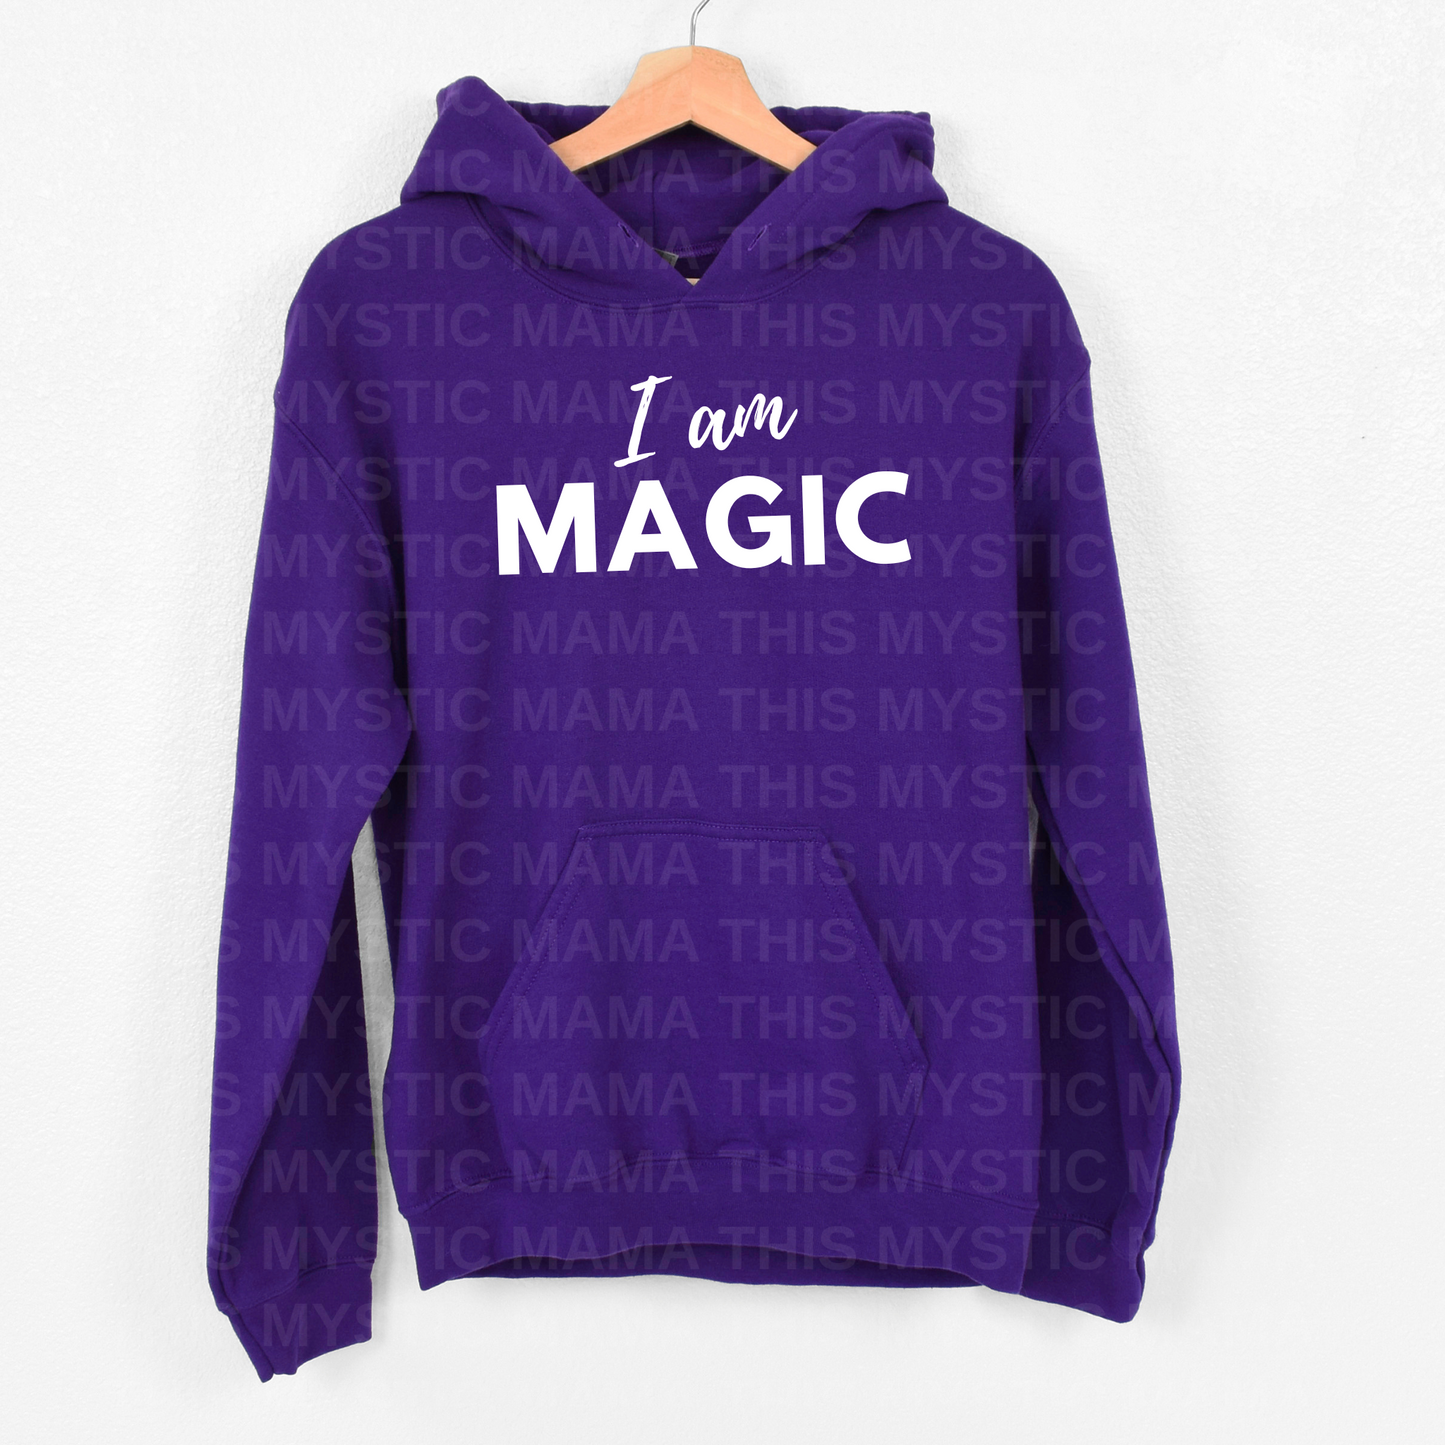 "I am MAGIC" Empowerment Hoodie